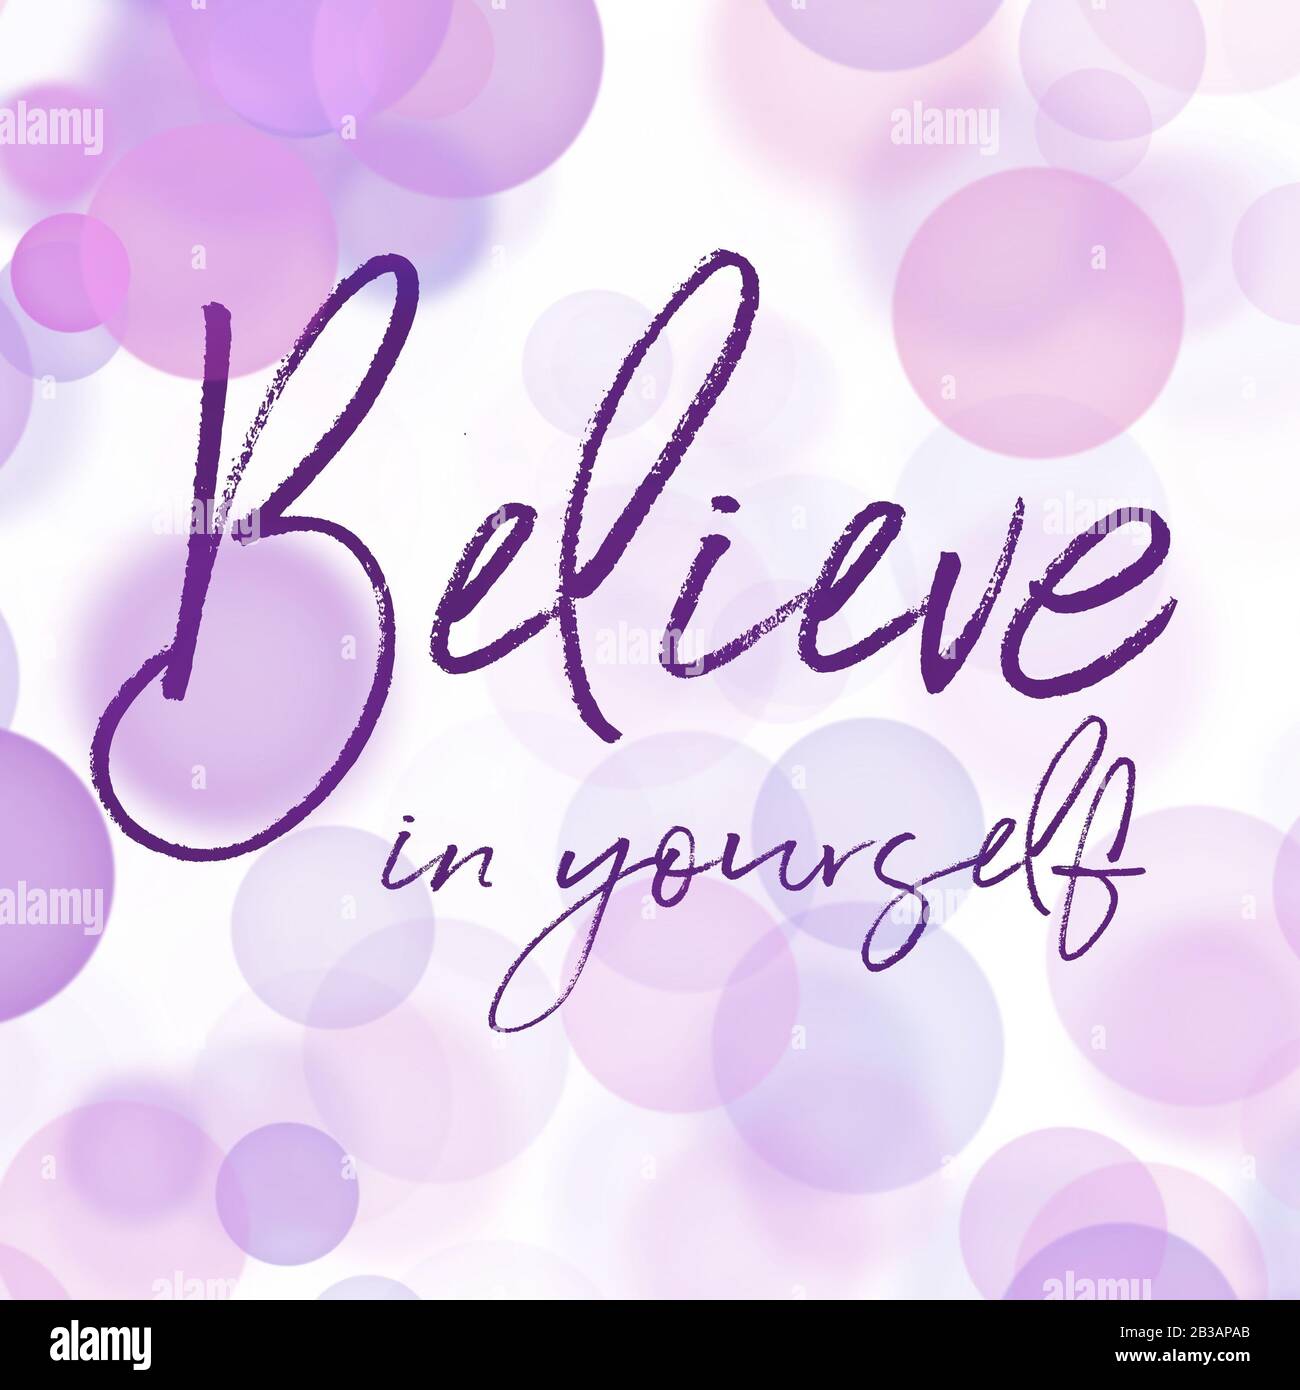 Believe in yourself: \